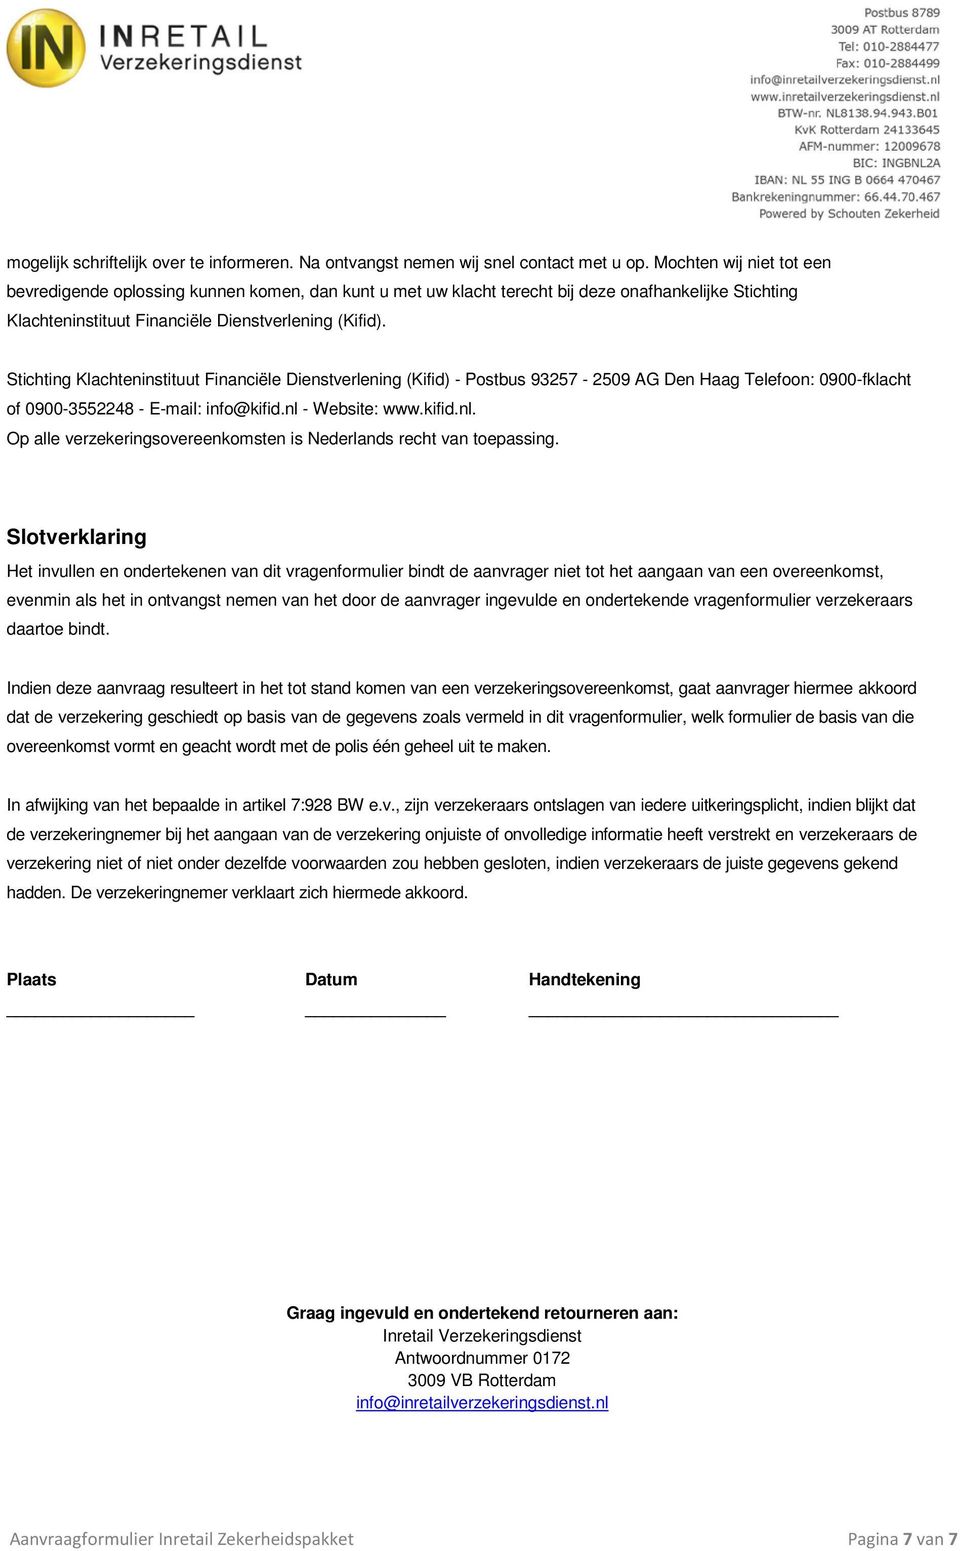 Stichting Klachteninstituut Financiële Dienstverlening (Kifid) - Postbus 93257-2509 AG Den Haag Telefoon: 0900-fklacht of 0900-3552248 - E-mail: info@kifid.nl 